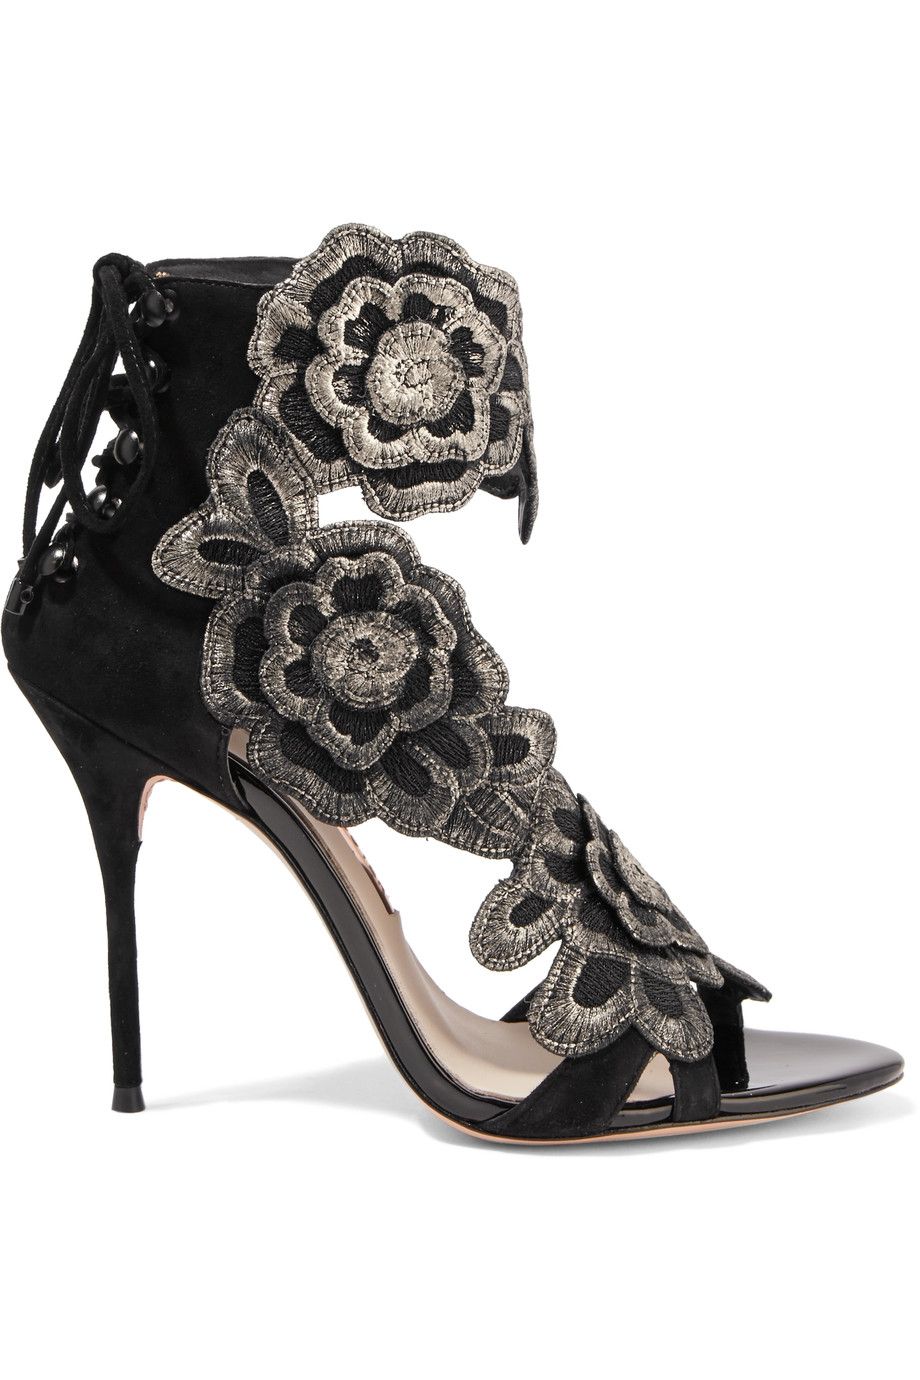 High heels, Sandal, Style, Basic pump, Beige, Foot, Bridal shoe, Fashion design, Silver, Dancing shoe, 